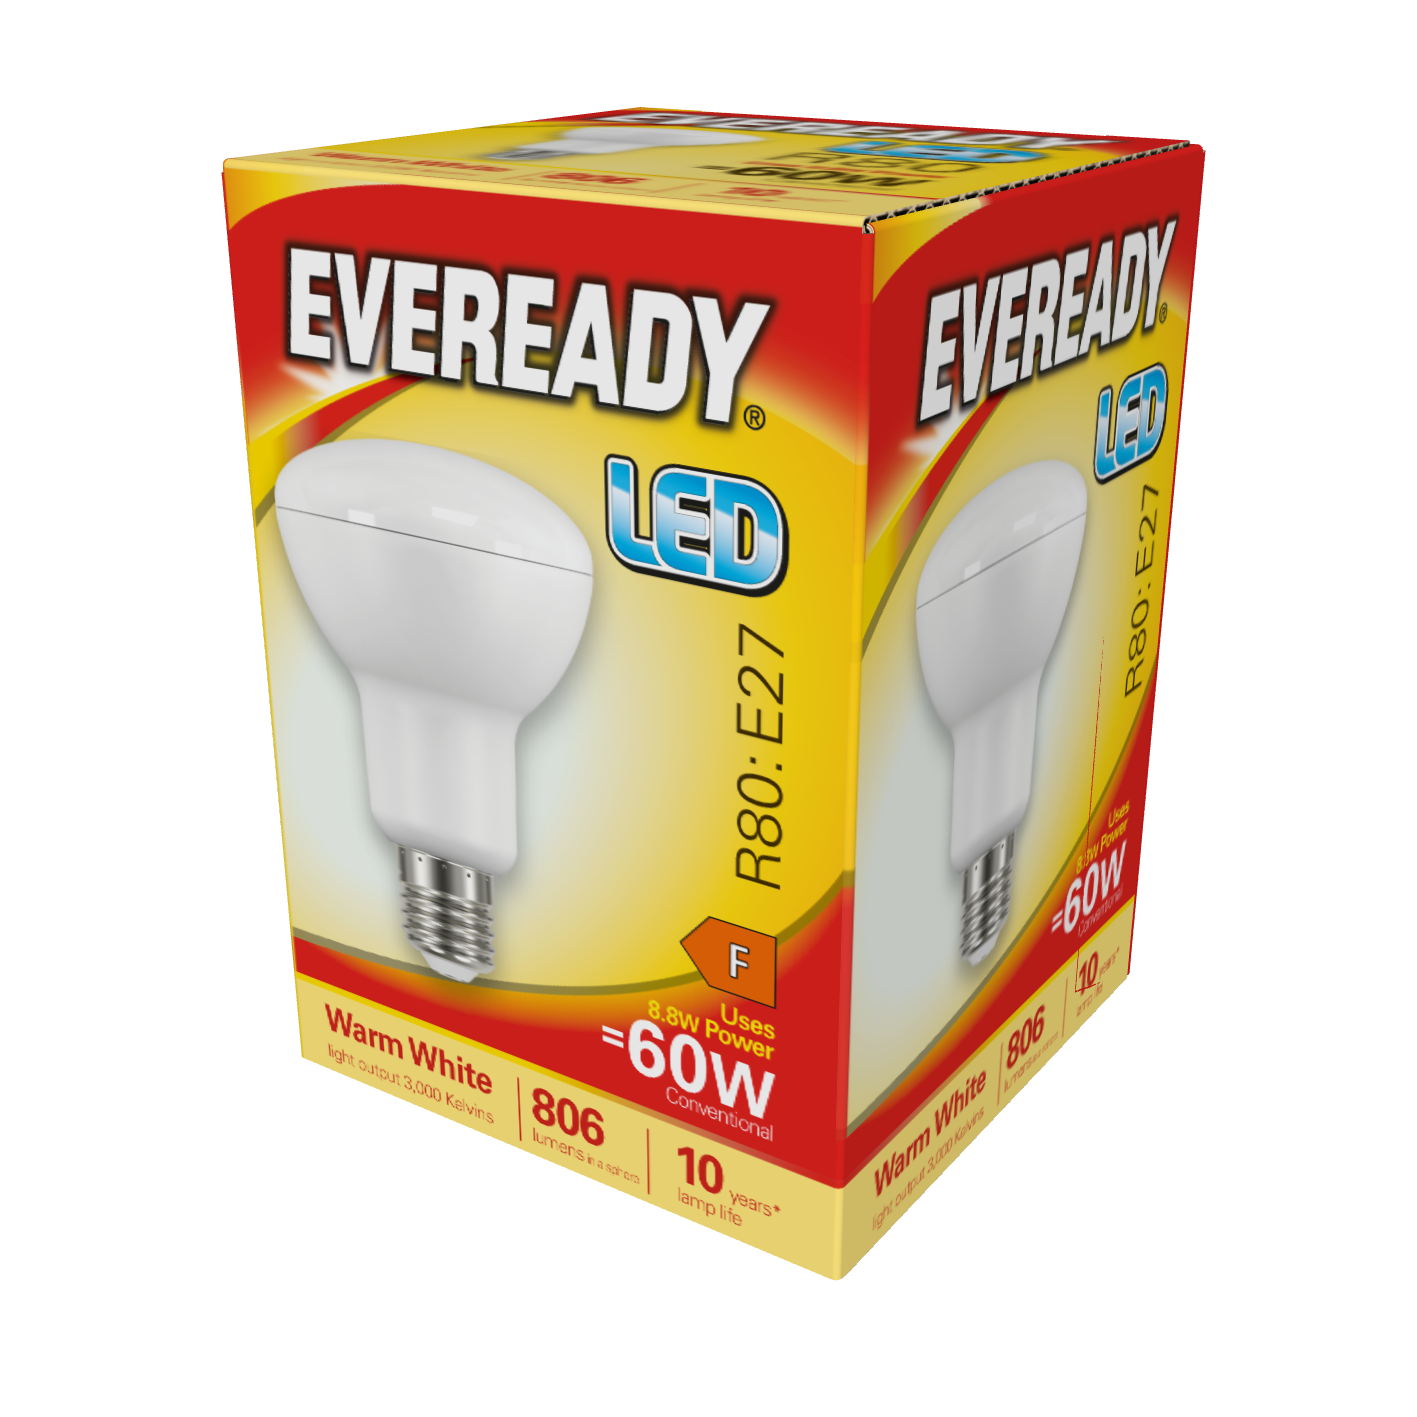 Eveready LED R80 Reflector E27 (ES) 806lm 8.8W 3,000K (Warm White), Box of 1